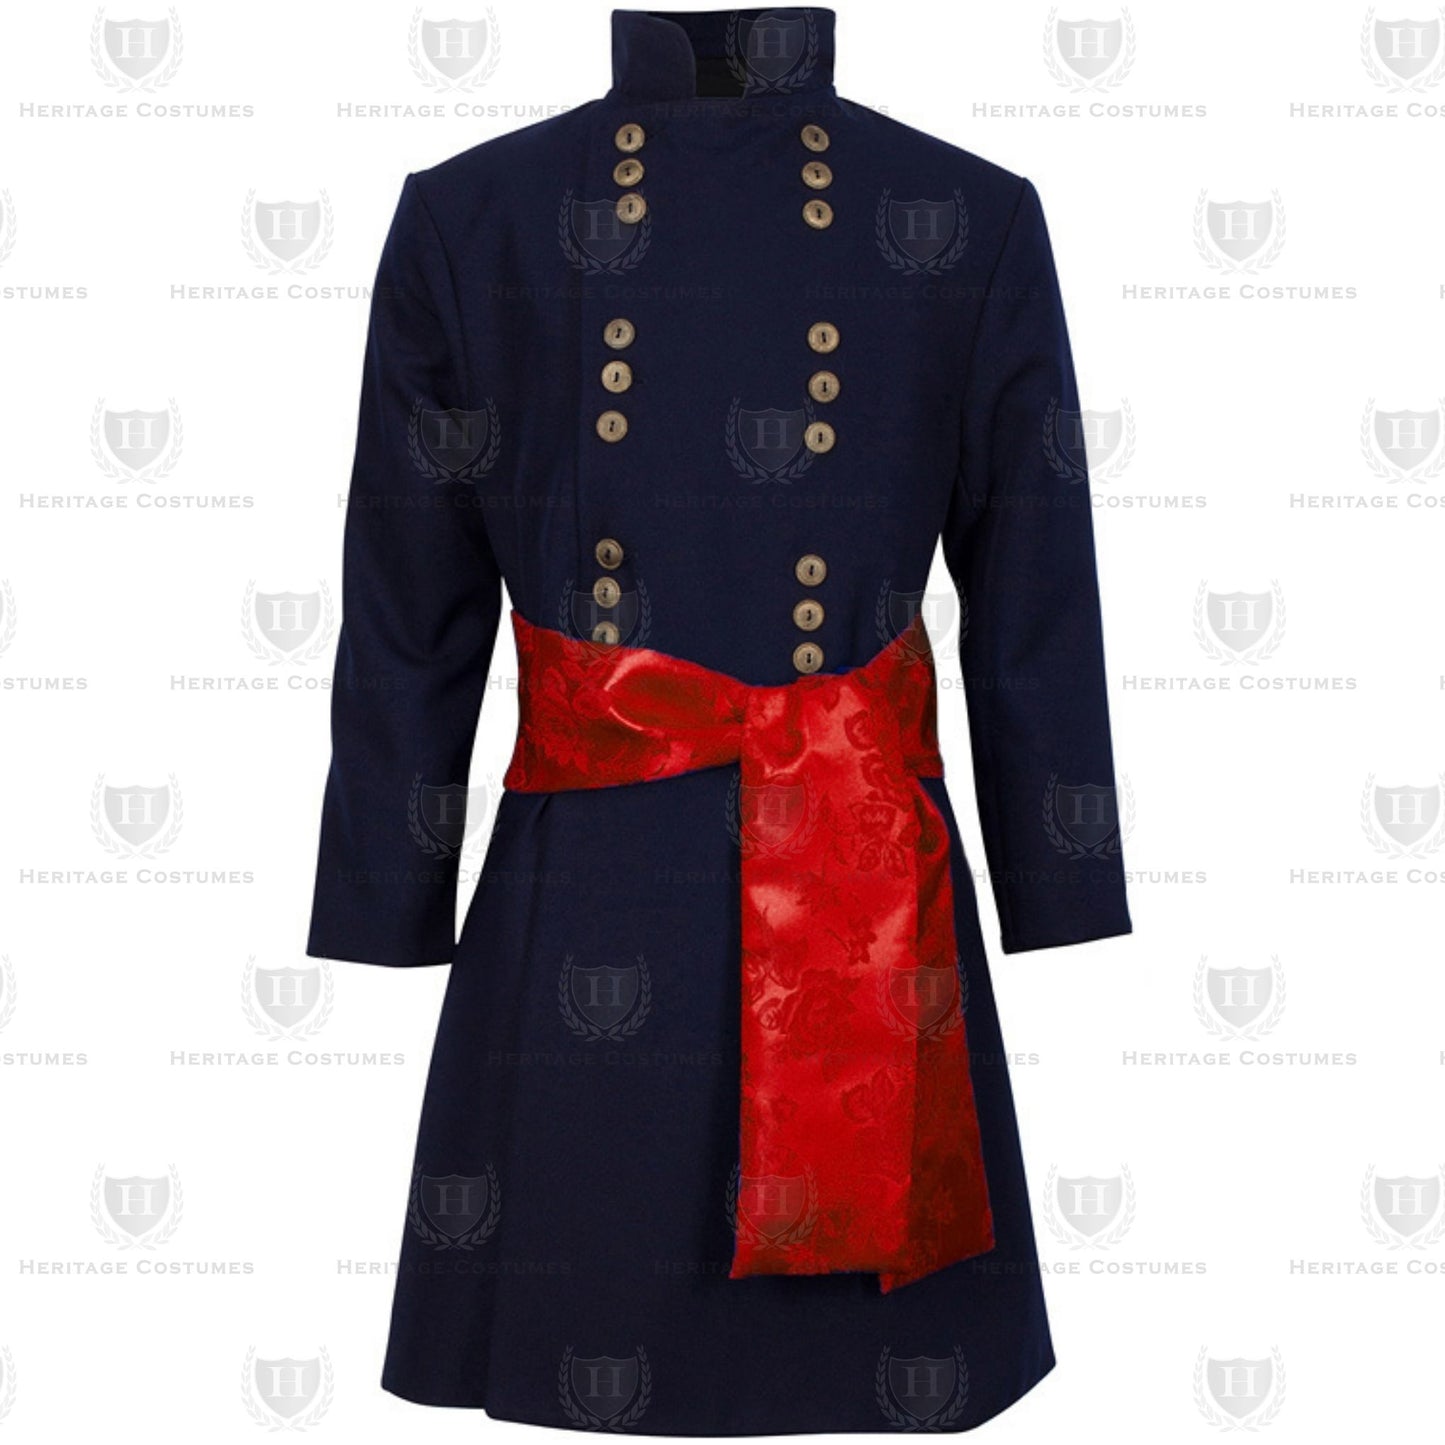 Children's John Fremont Civil War Uniform Costume - Authentic Looking Union Officer Outfit for Kids